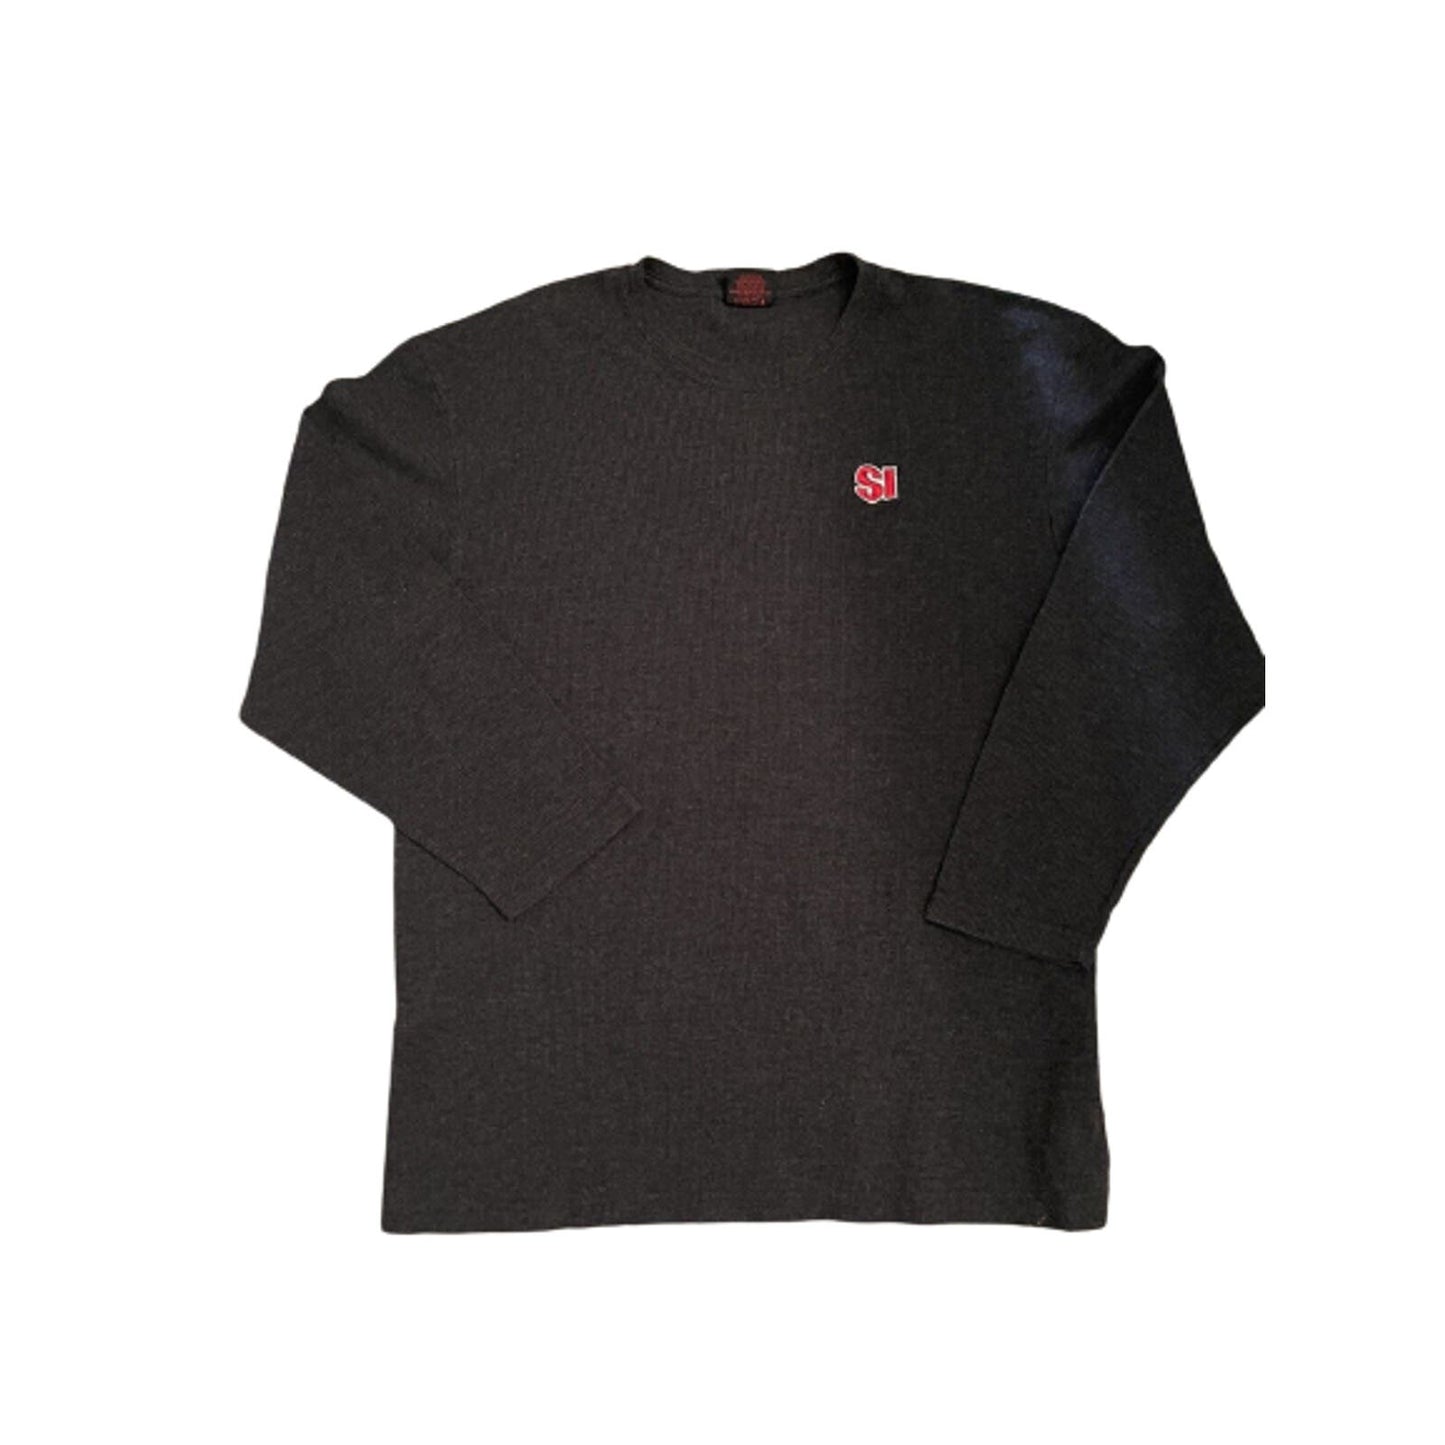 Sports Illustrated Men's XL Gray Thermal Long Sleeve Shirt - Waffle Knit